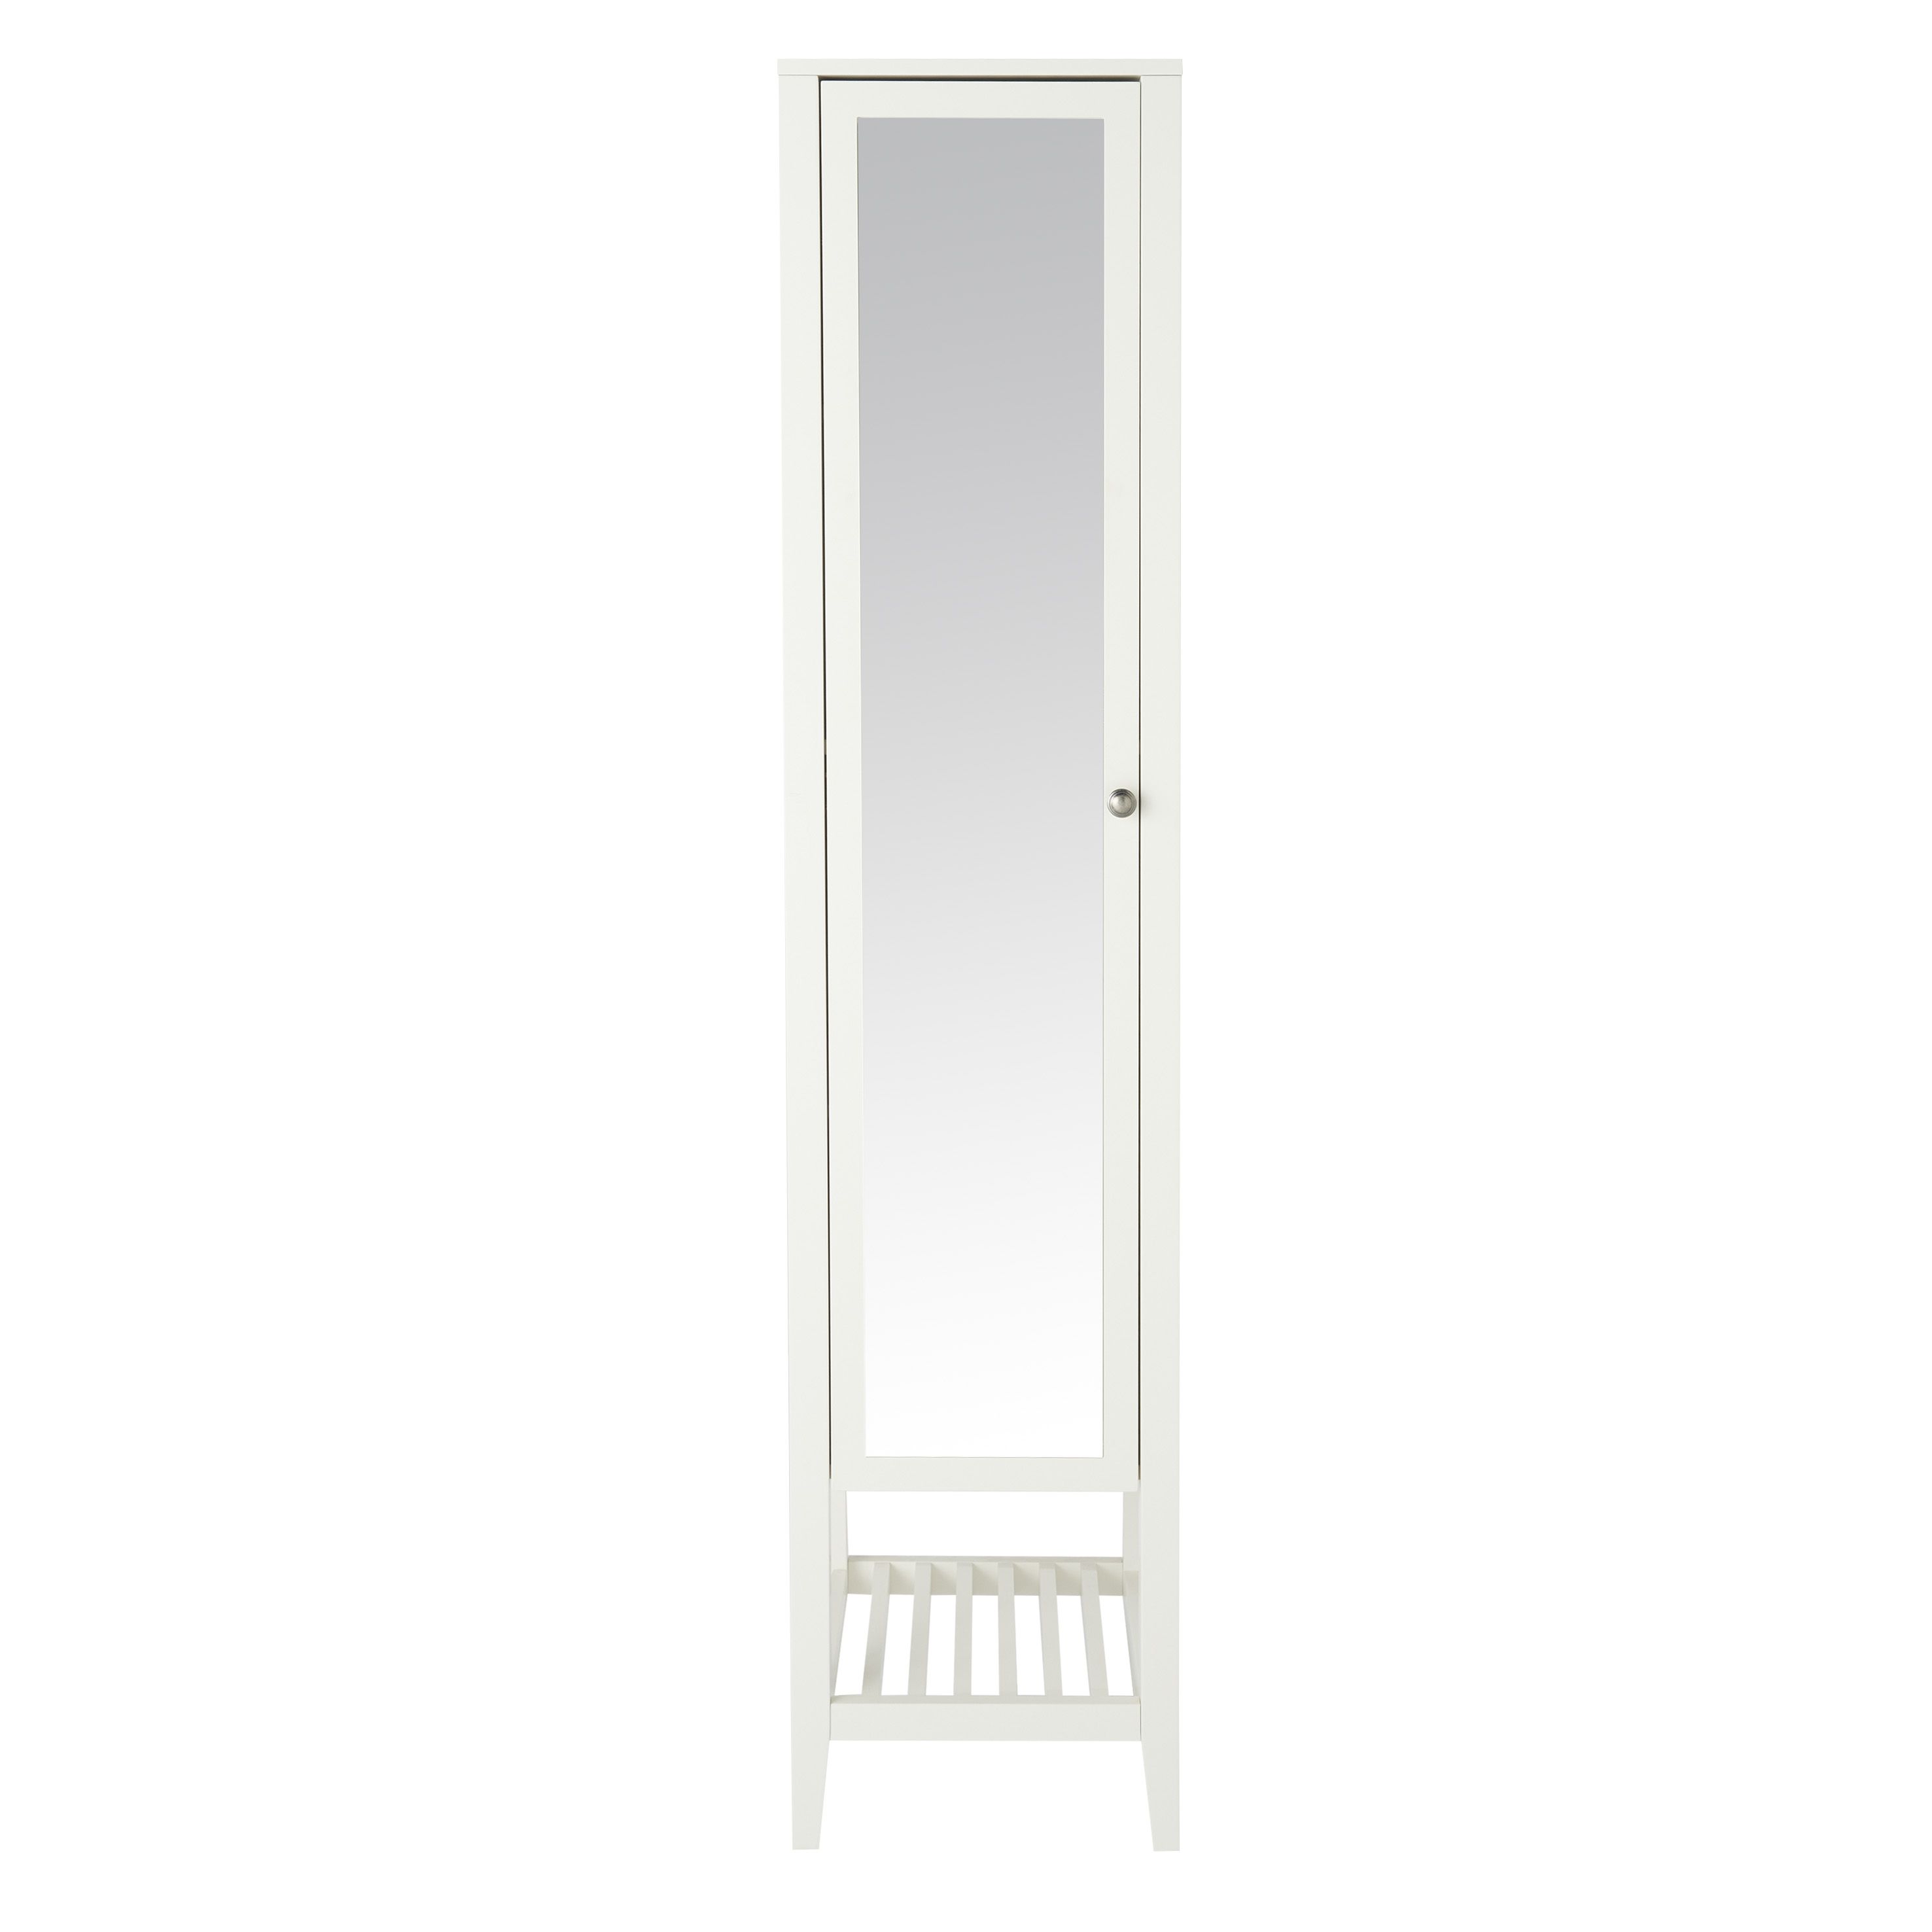 GoodHome Perma Tall Satin White Single Bathroom Cabinet (H)185cm (W)40cm